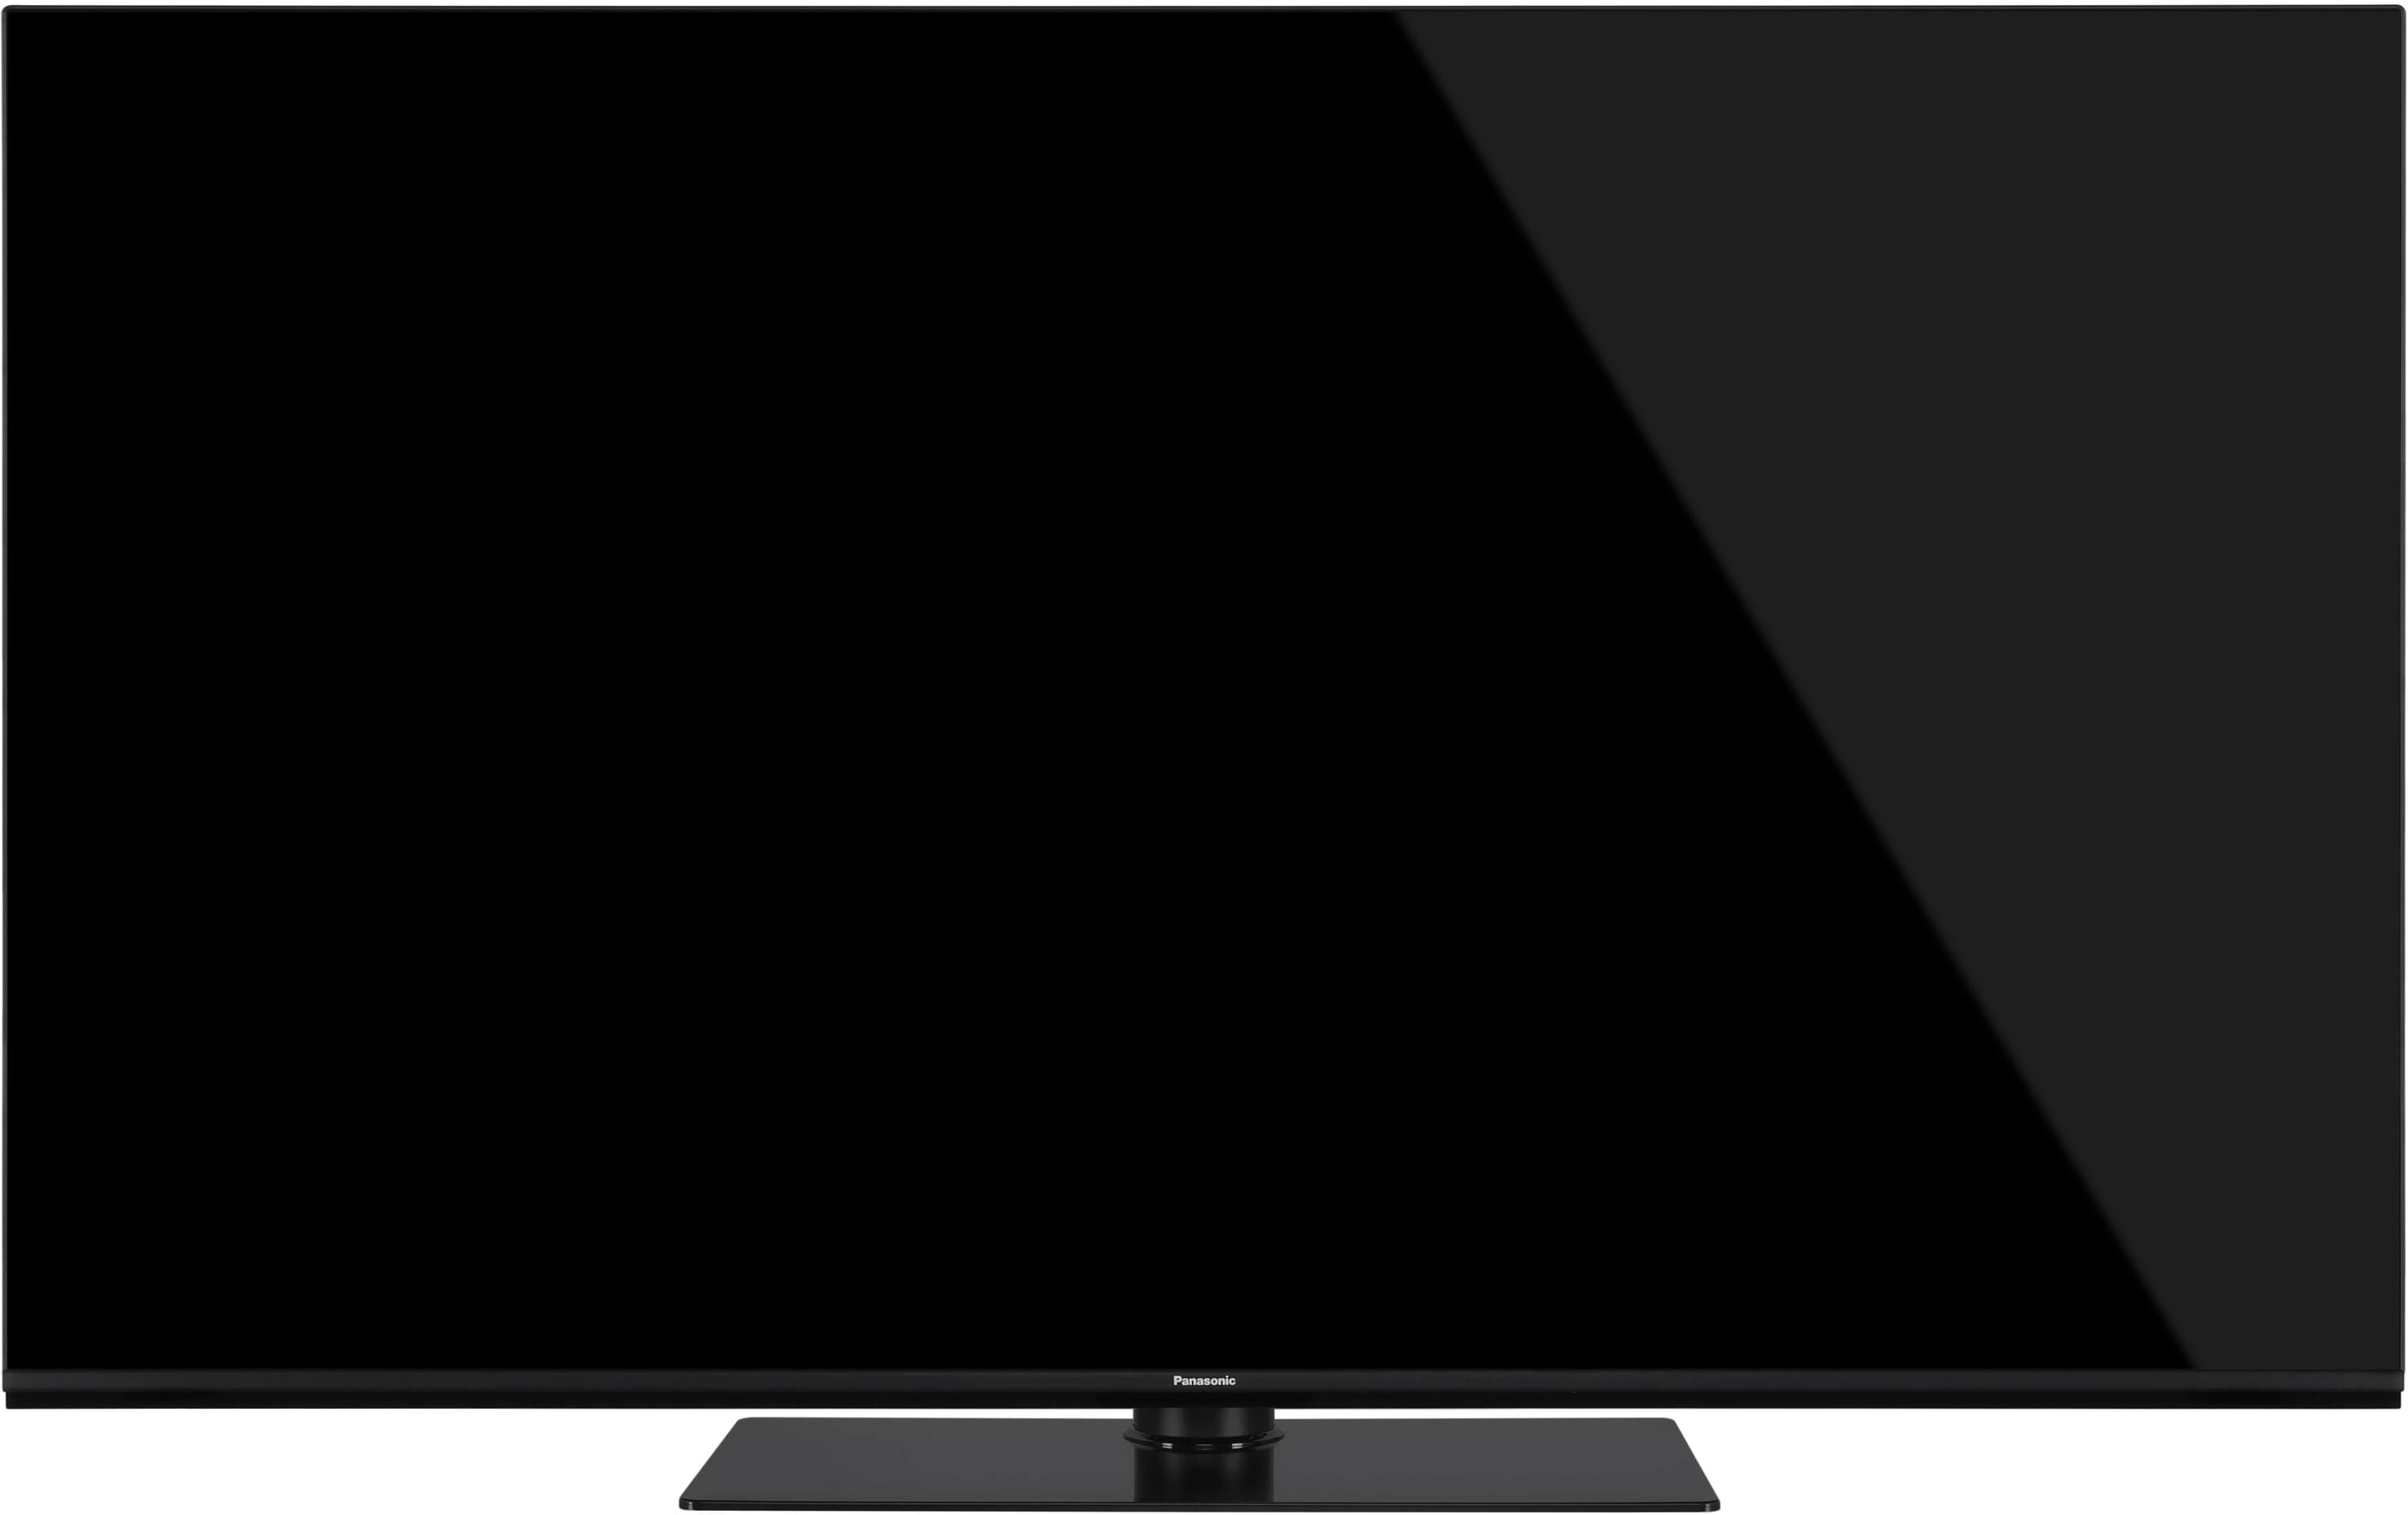 Panasonic TV TX-48MZ800E 48, 3840 x 2160 (Ultra HD 4K), OLED